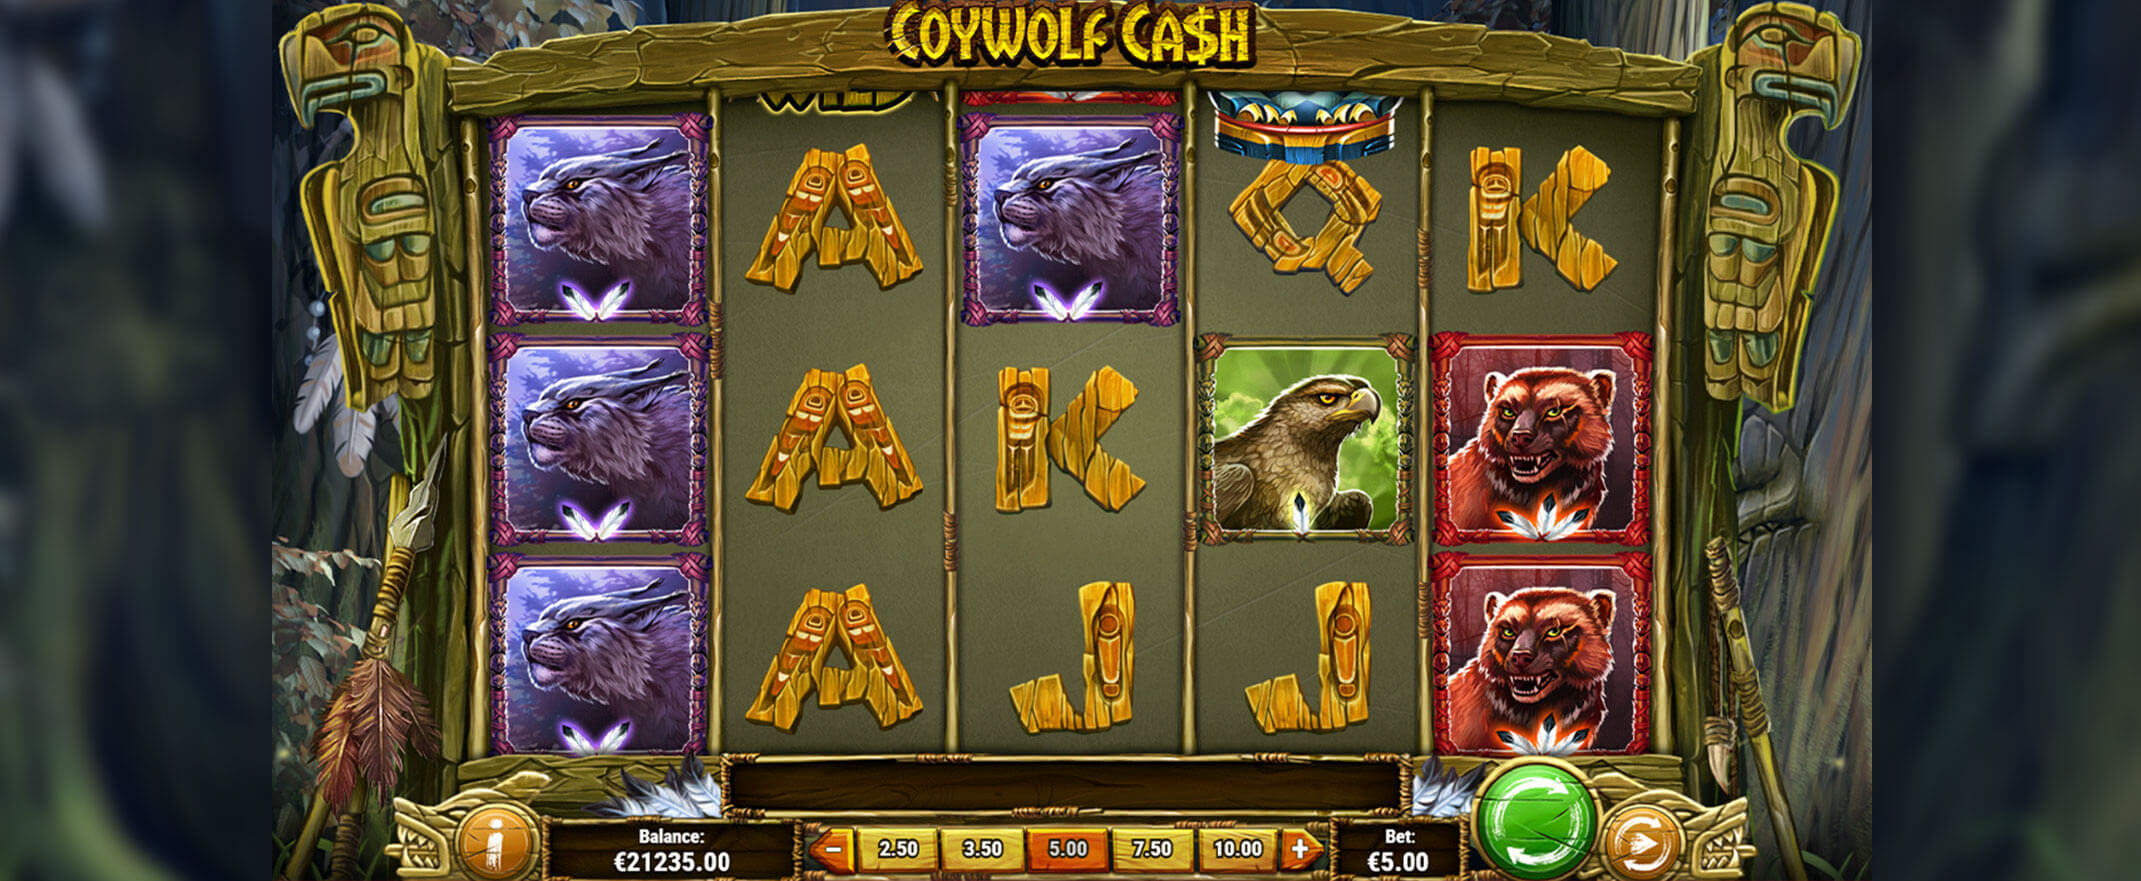 Coywolf Cash Spielautomaten spielen